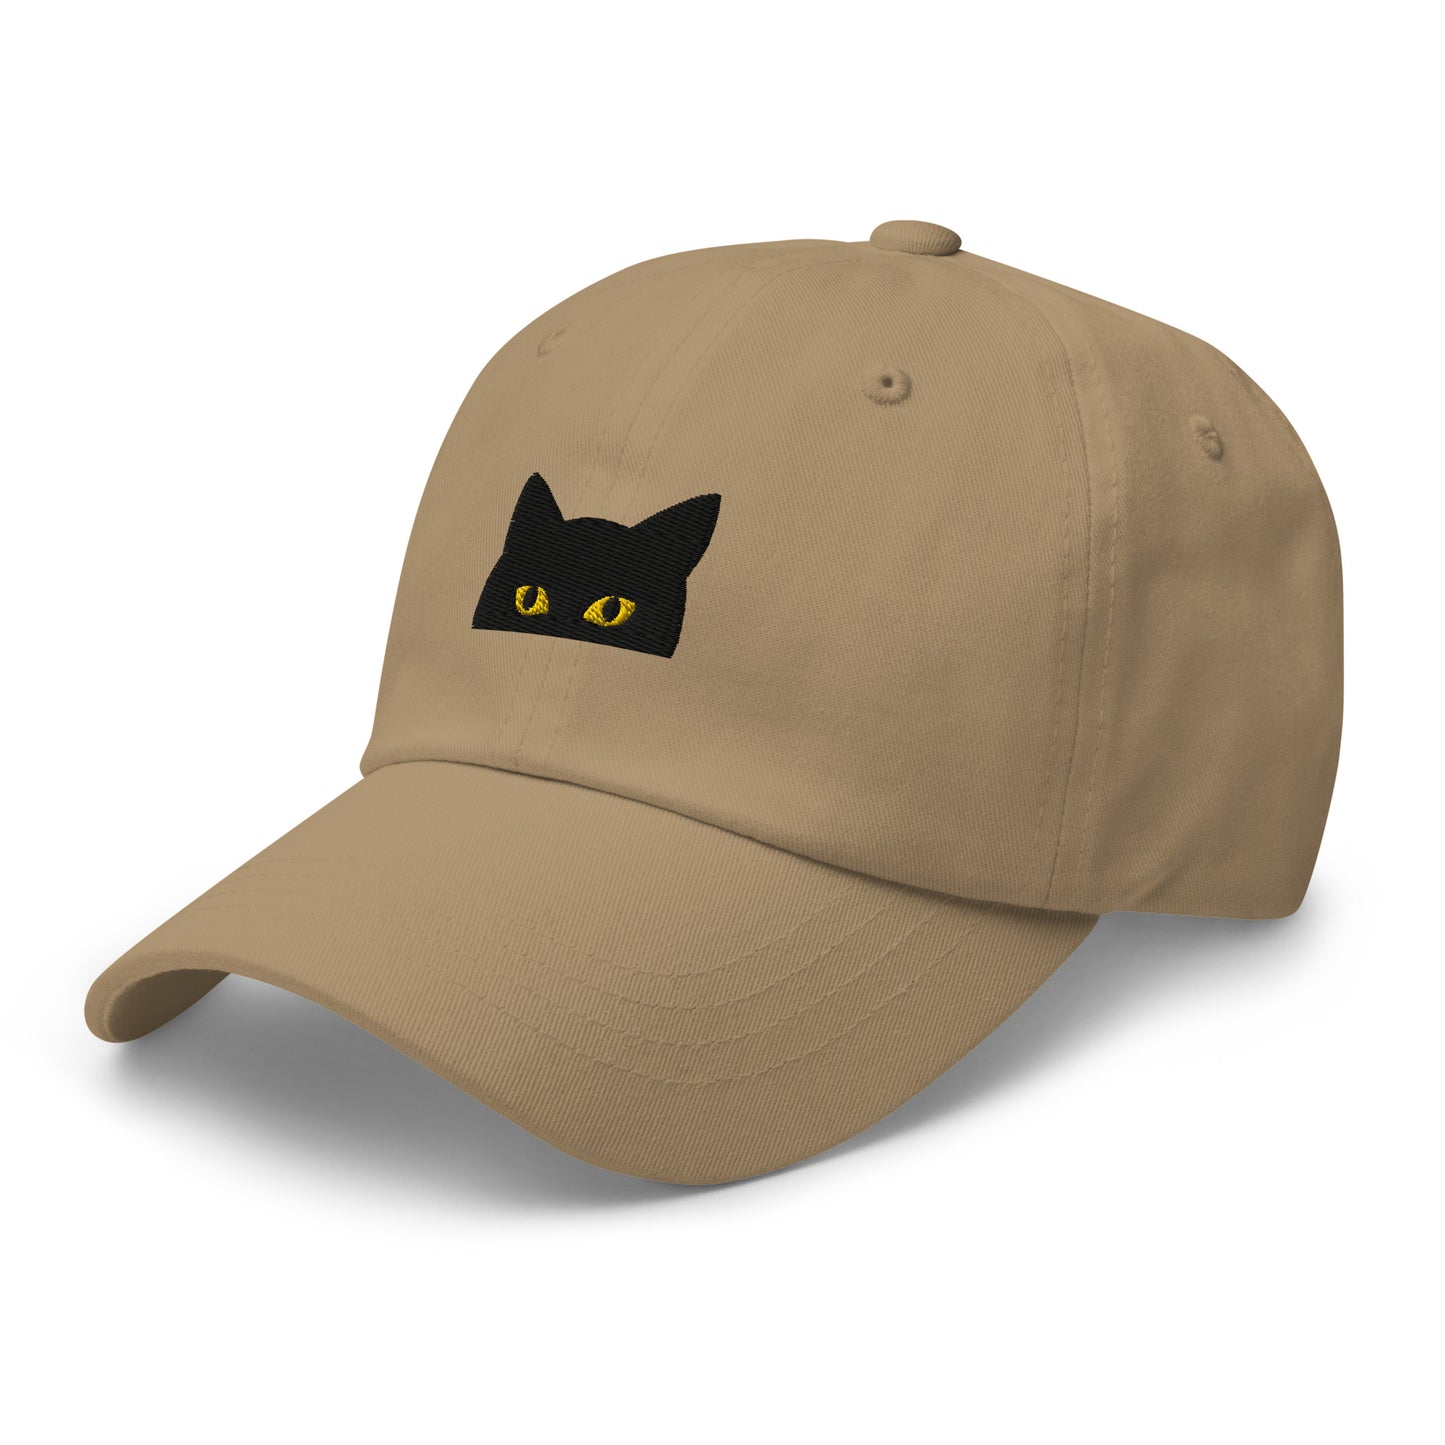 Peeking Black Cat Embroidered Baseball Cap